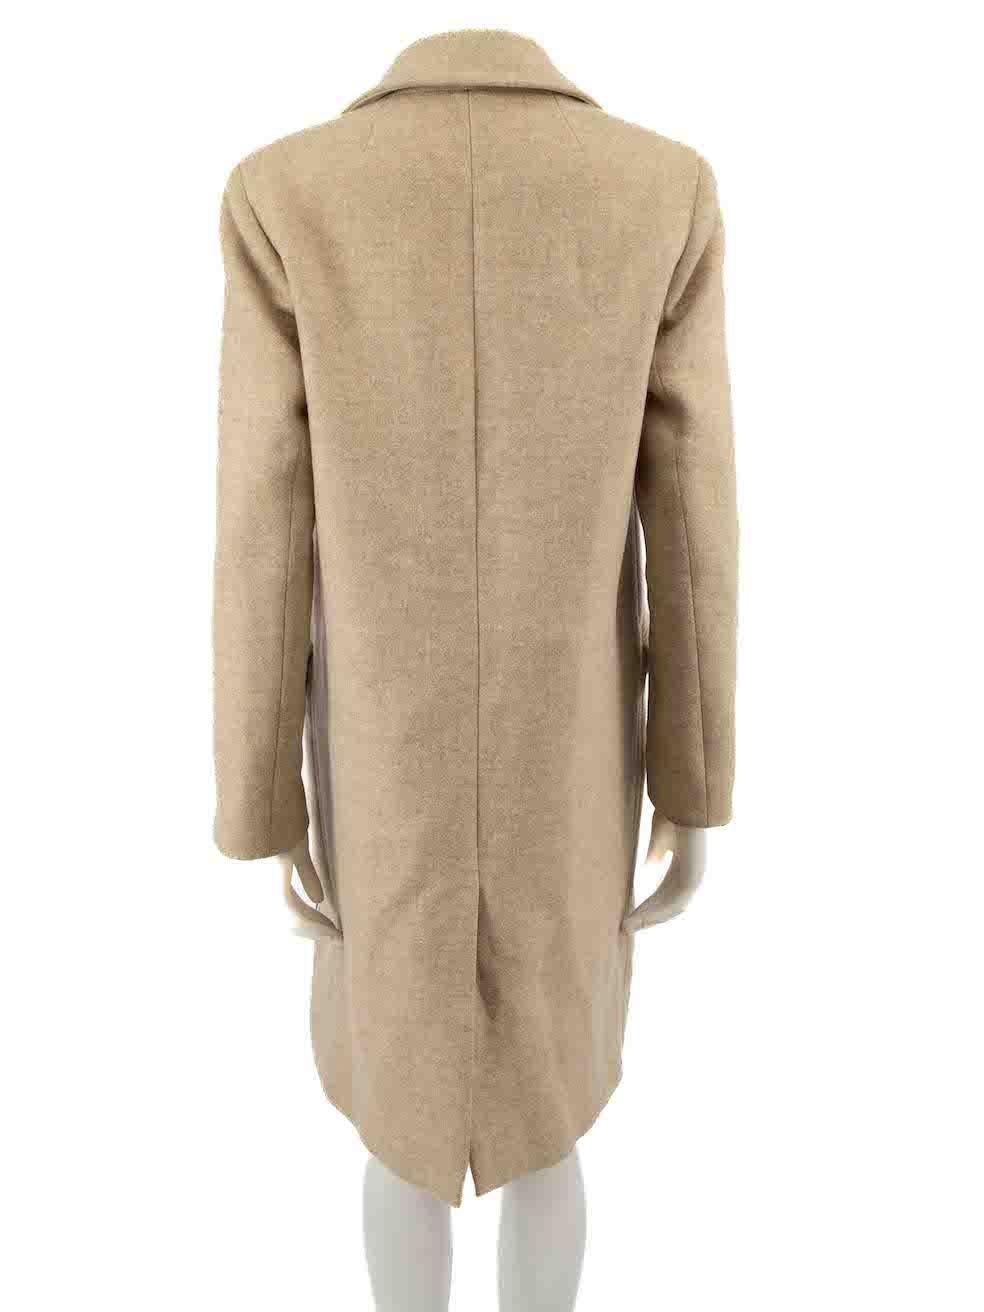 Nicole Farhi Beige Stripe Detail Coat Size S In Good Condition For Sale In London, GB